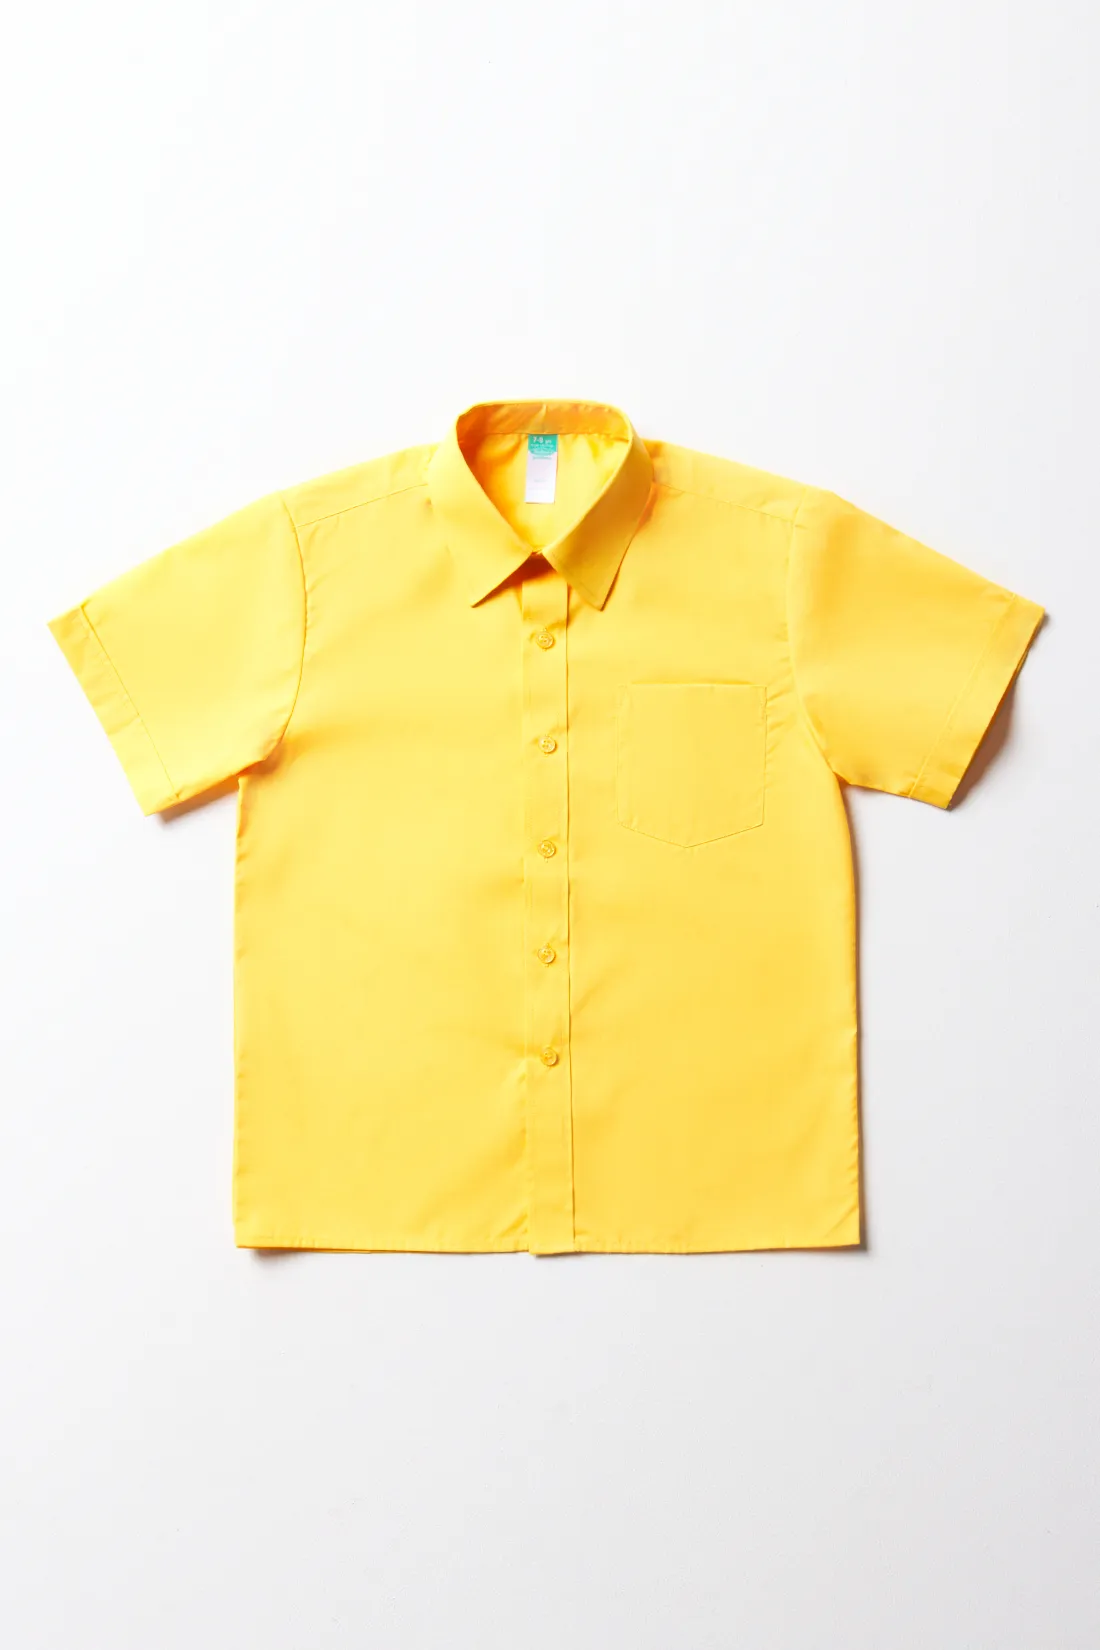 Unisex short sleeve collar shirt gold - Kids's School Clothes | Ackermans